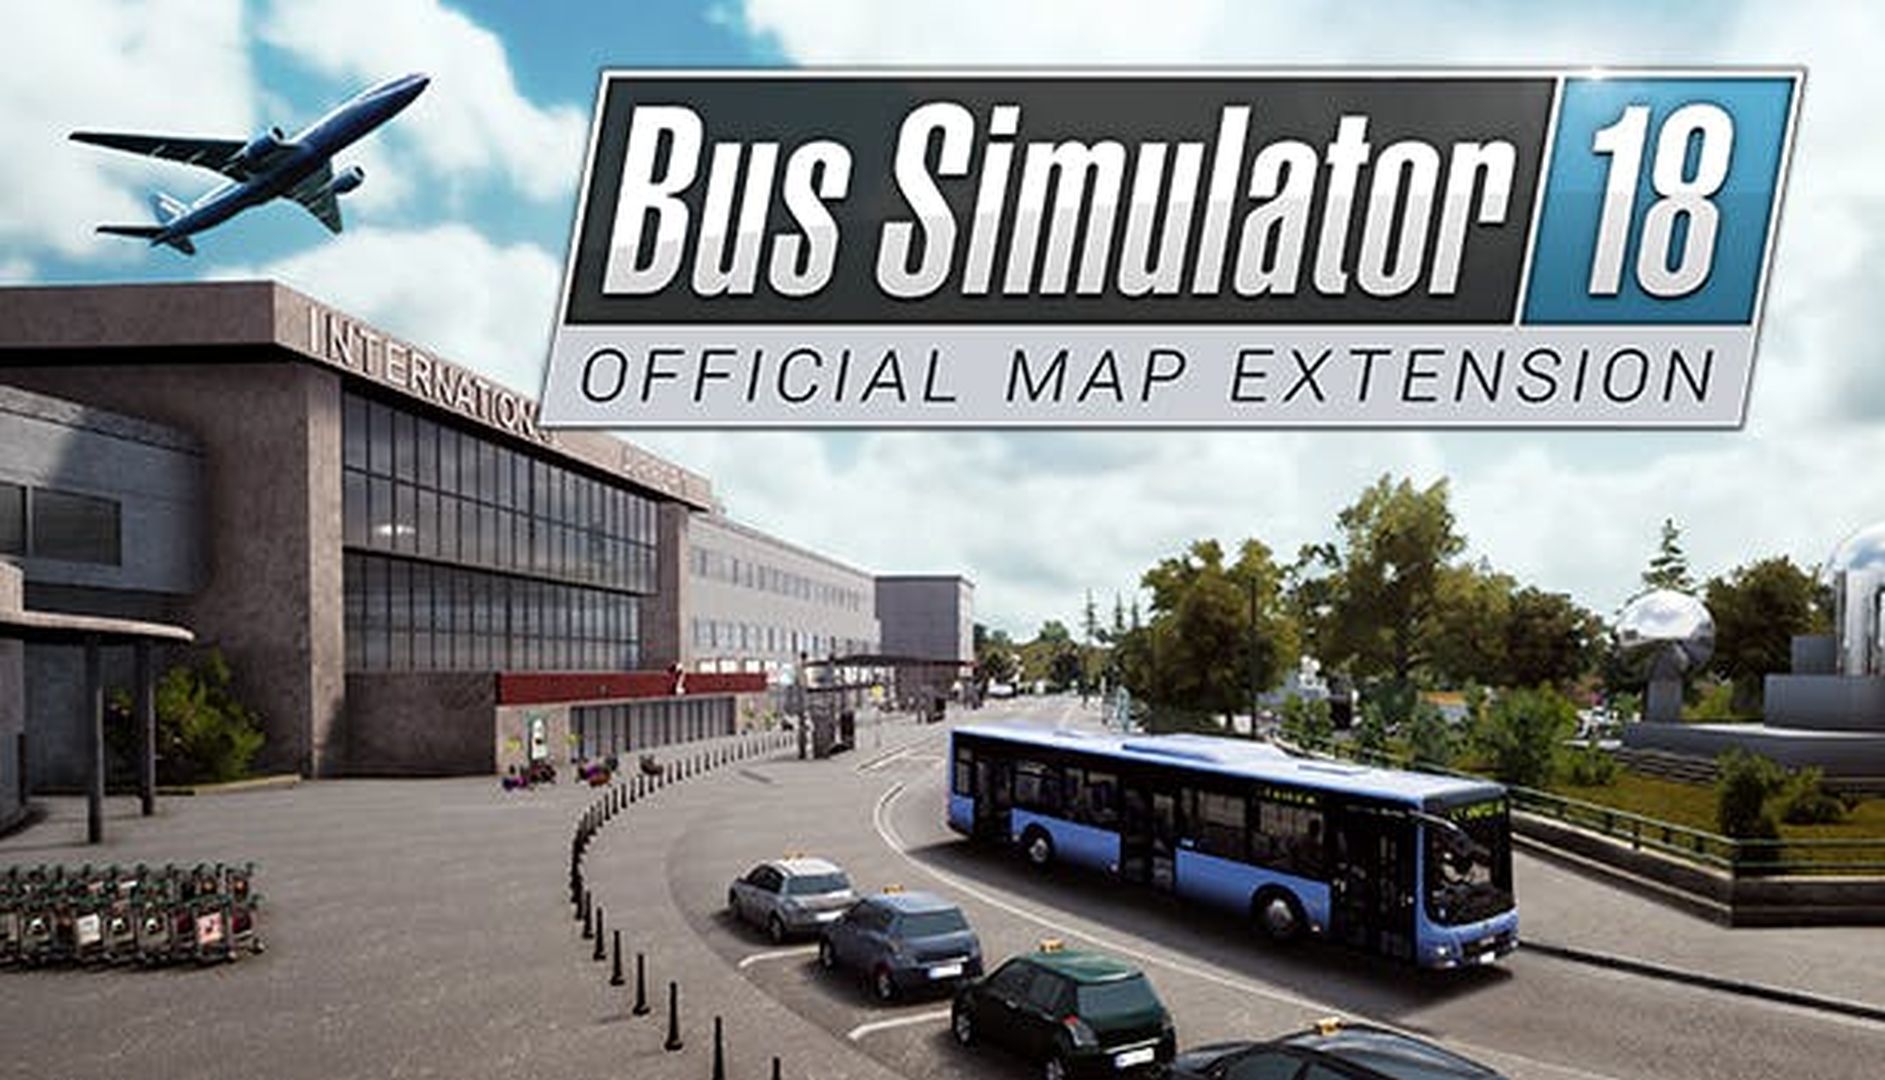 steam workshop bus simulator 18